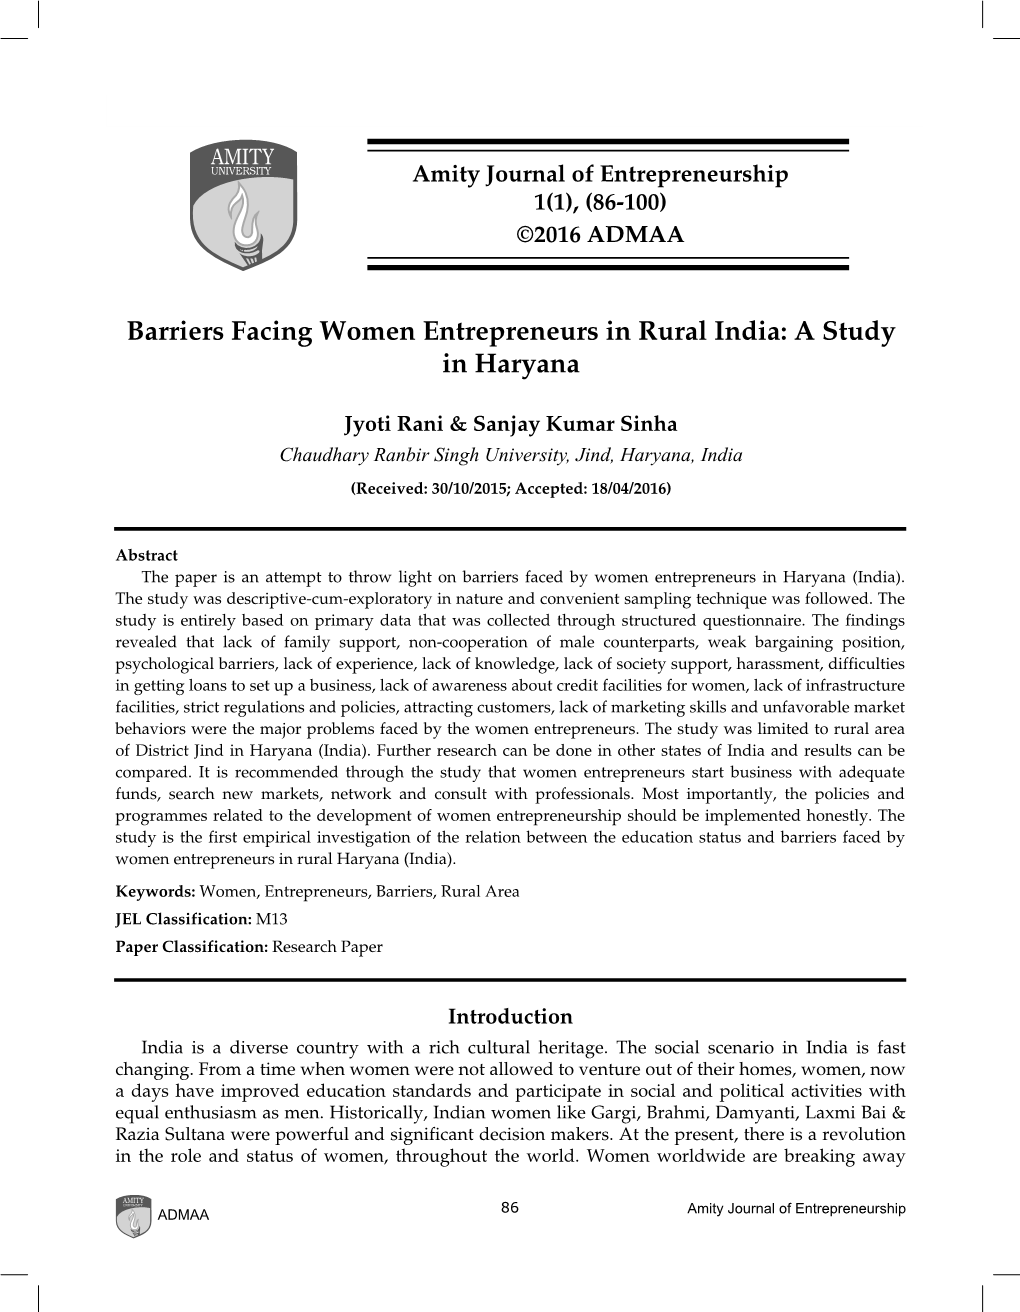 Barriers Facing Women Entrepreneurs in Rural India: a Study in Haryana